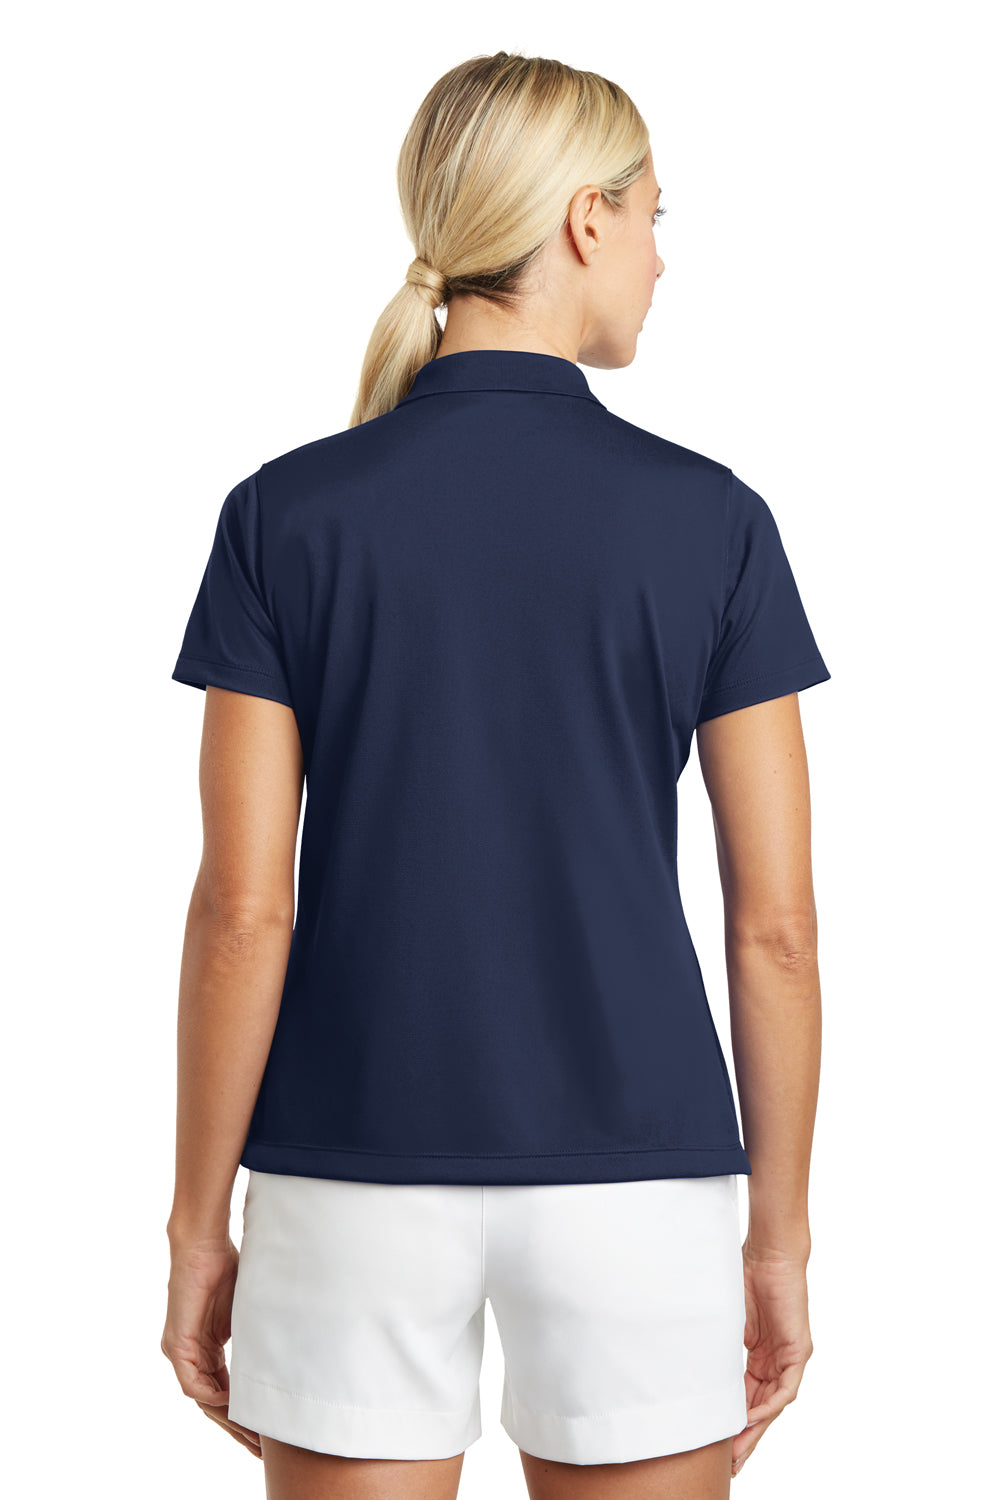 Nike 203697 Womens Tech Basic Dri-Fit Moisture Wicking Short Sleeve Polo Shirt Midnight Navy Blue Model Back